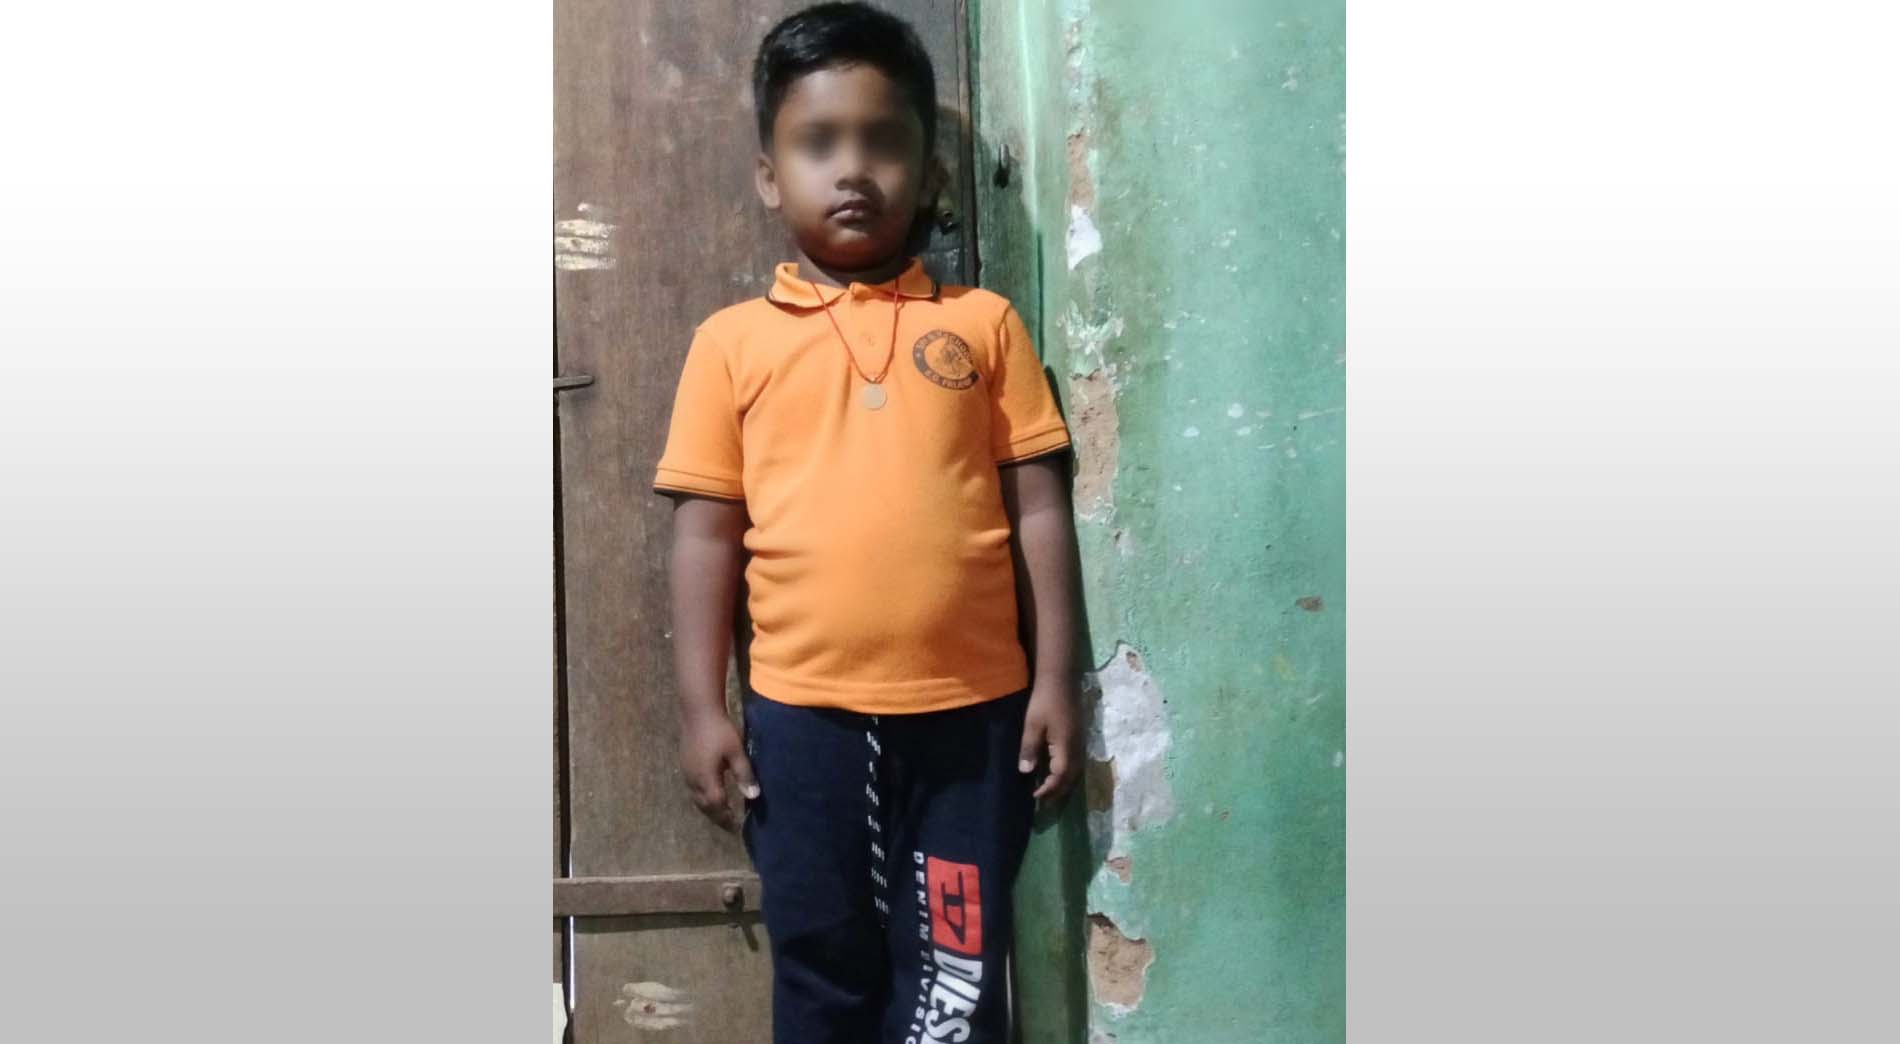 I am Ganesan seeking help to save my 6 Year old Child Kavin